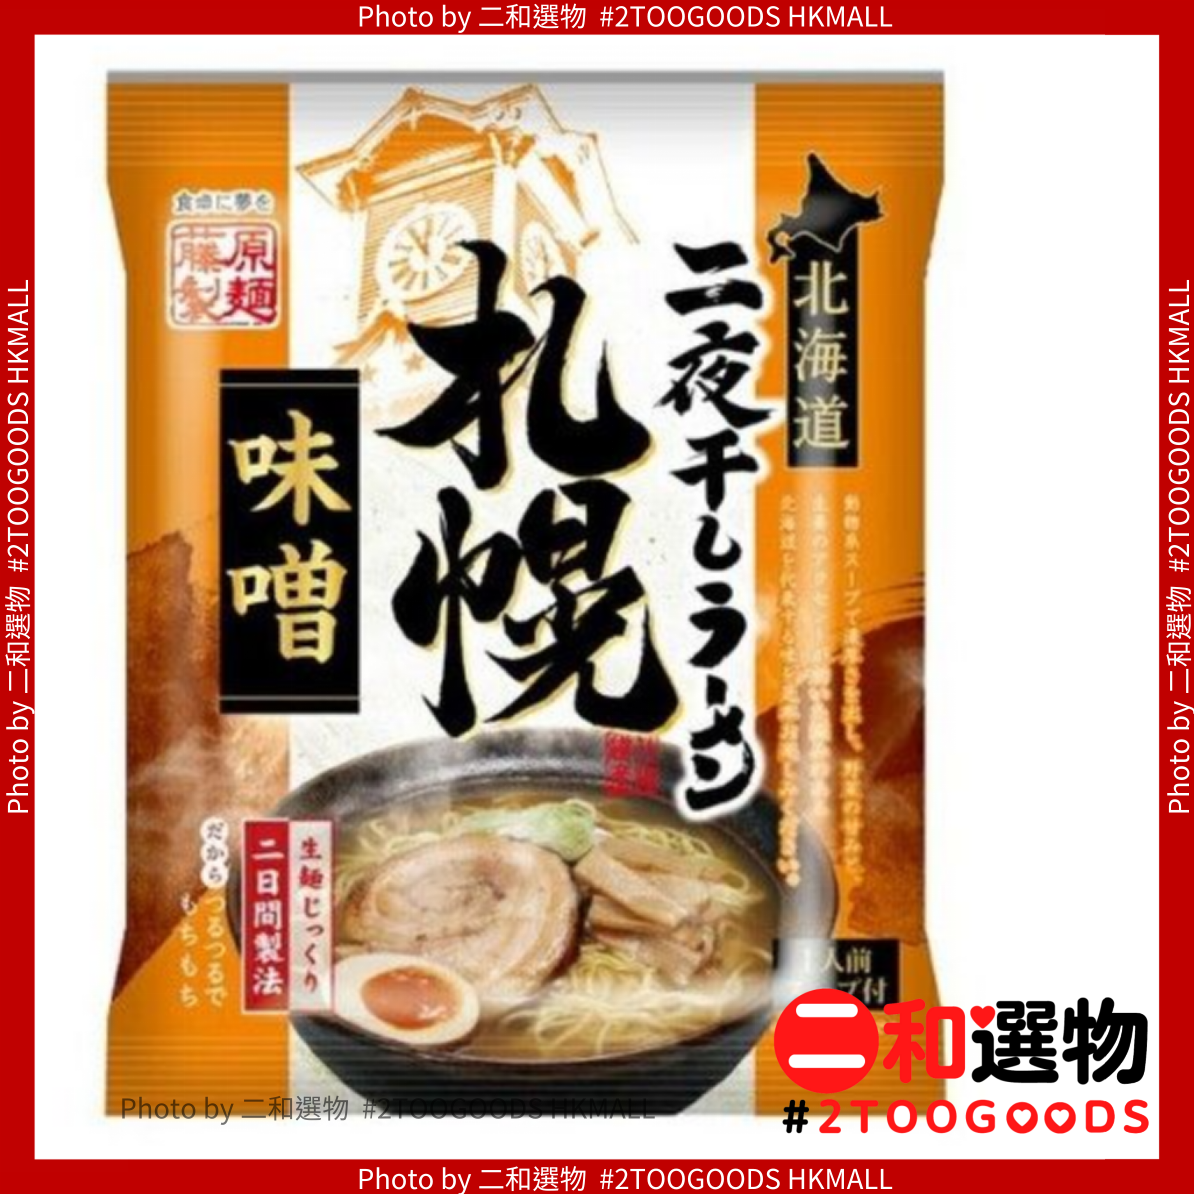 Hokkaido Three Great Ramen Sapporo(4976651 087539) 橙 札幌味噌 Miso Flavor 108g   Noodles